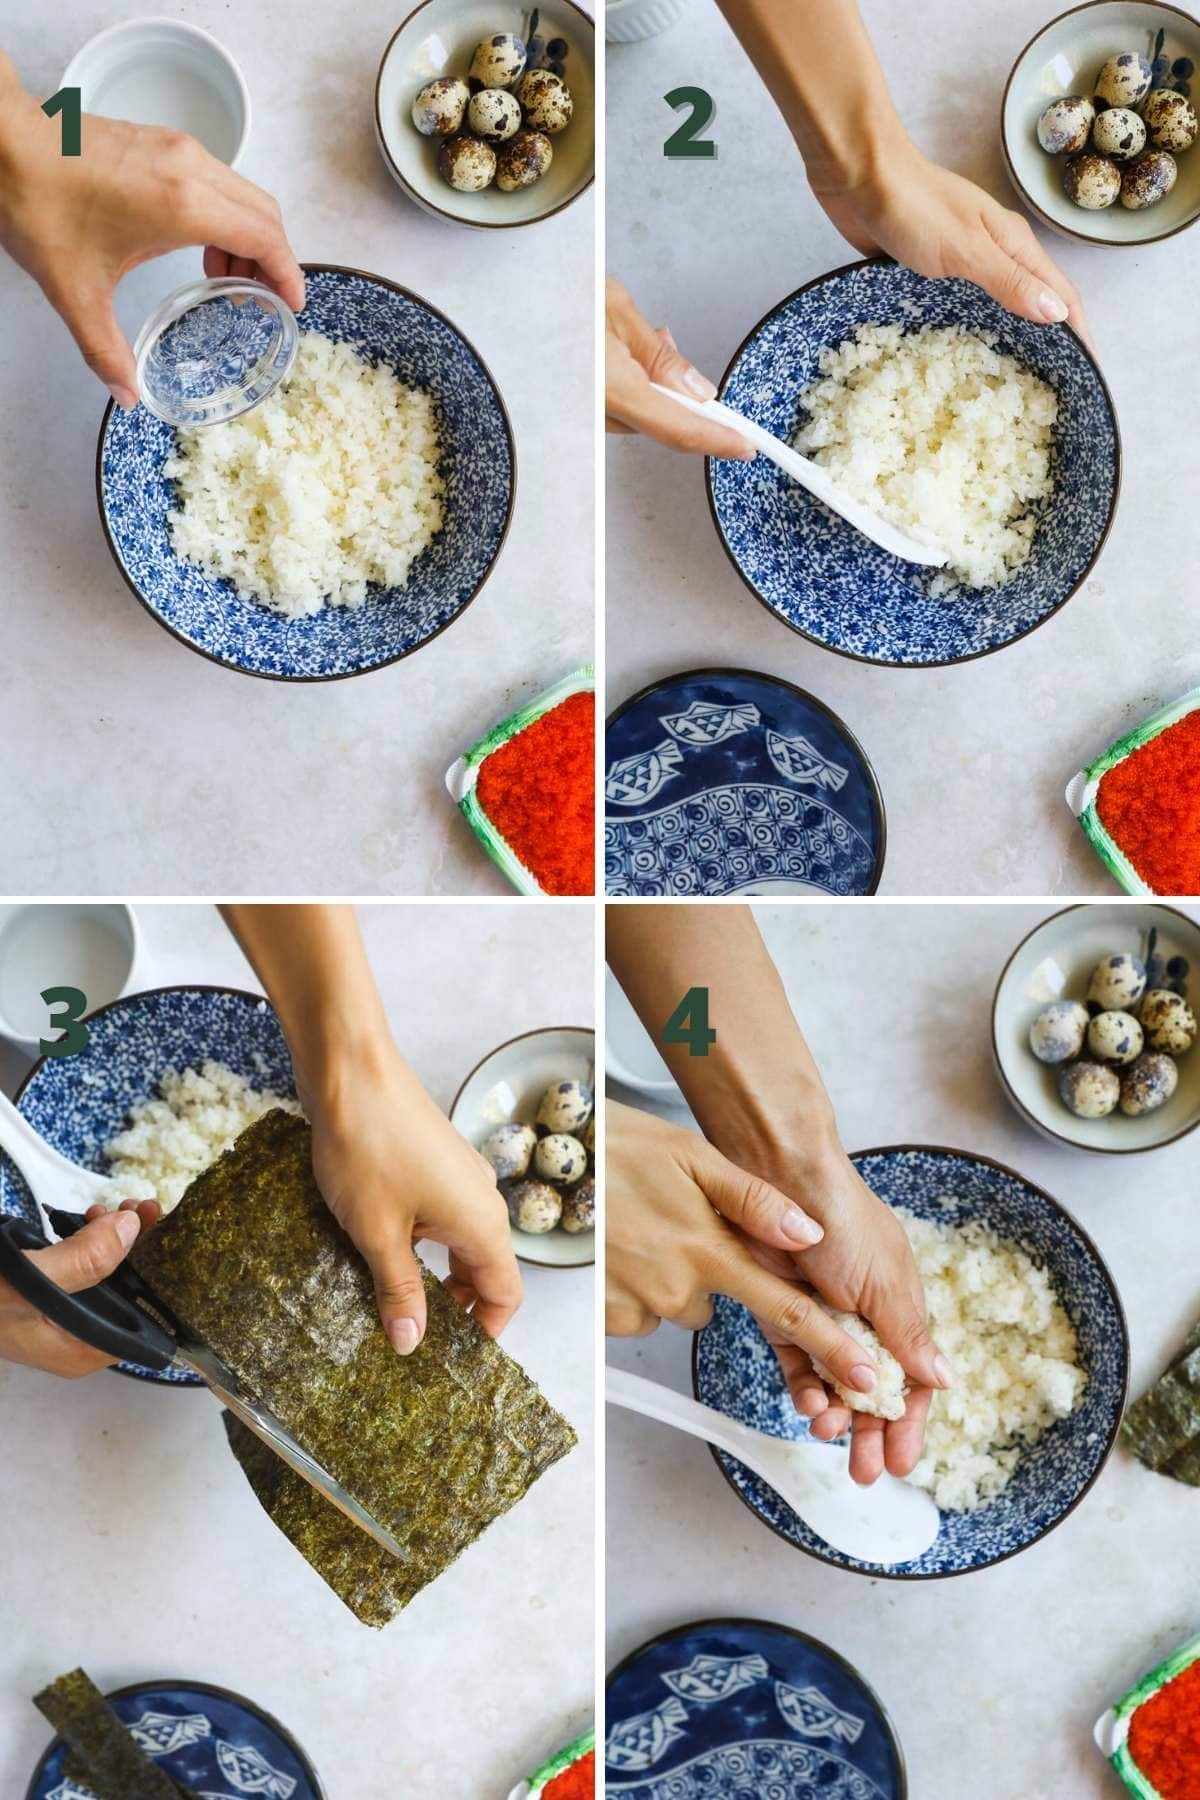 Steps for tobiko quail egg gunkan nigiri sushi, including how to form the rice.